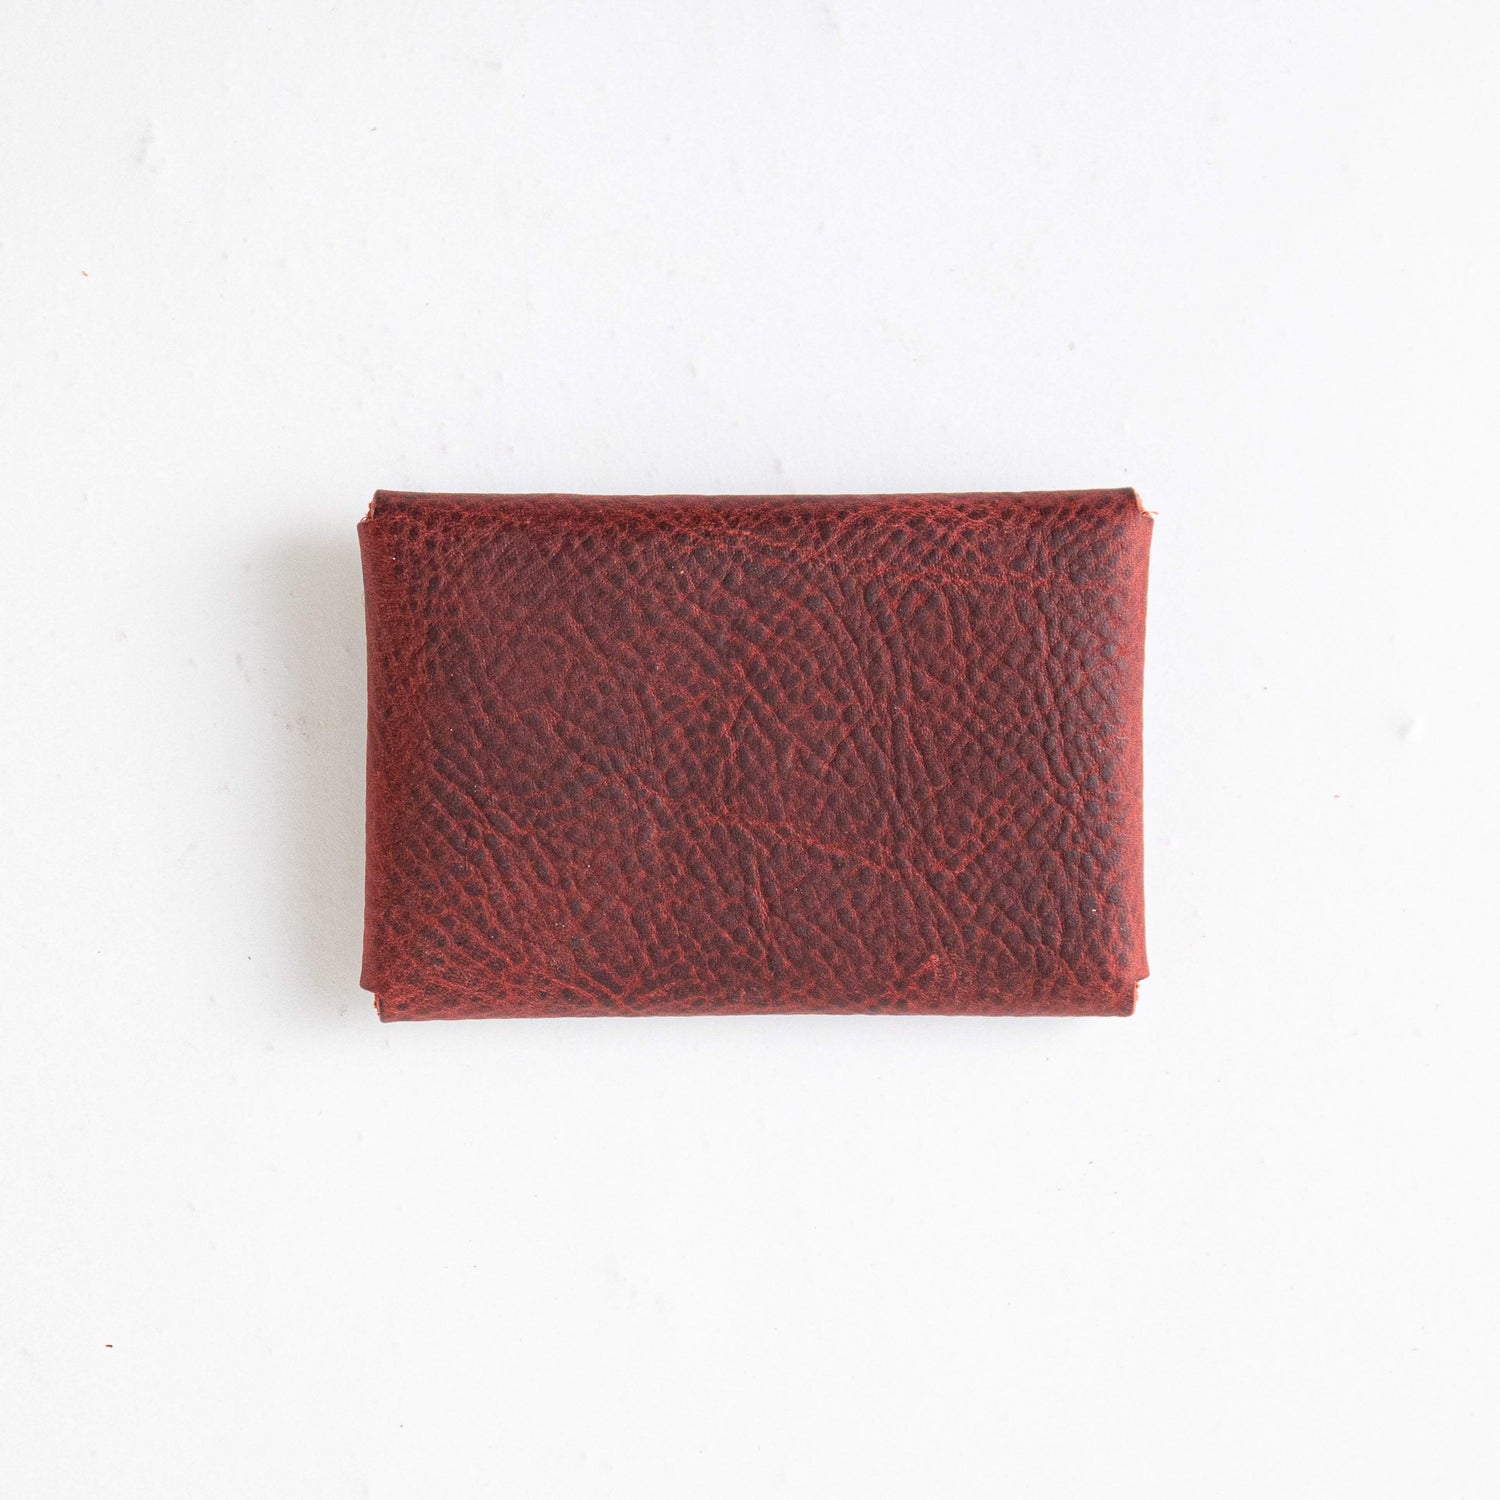 Red Kodiak Card Envelope- card holder wallet - leather wallet made in America at KMM &amp; Co.